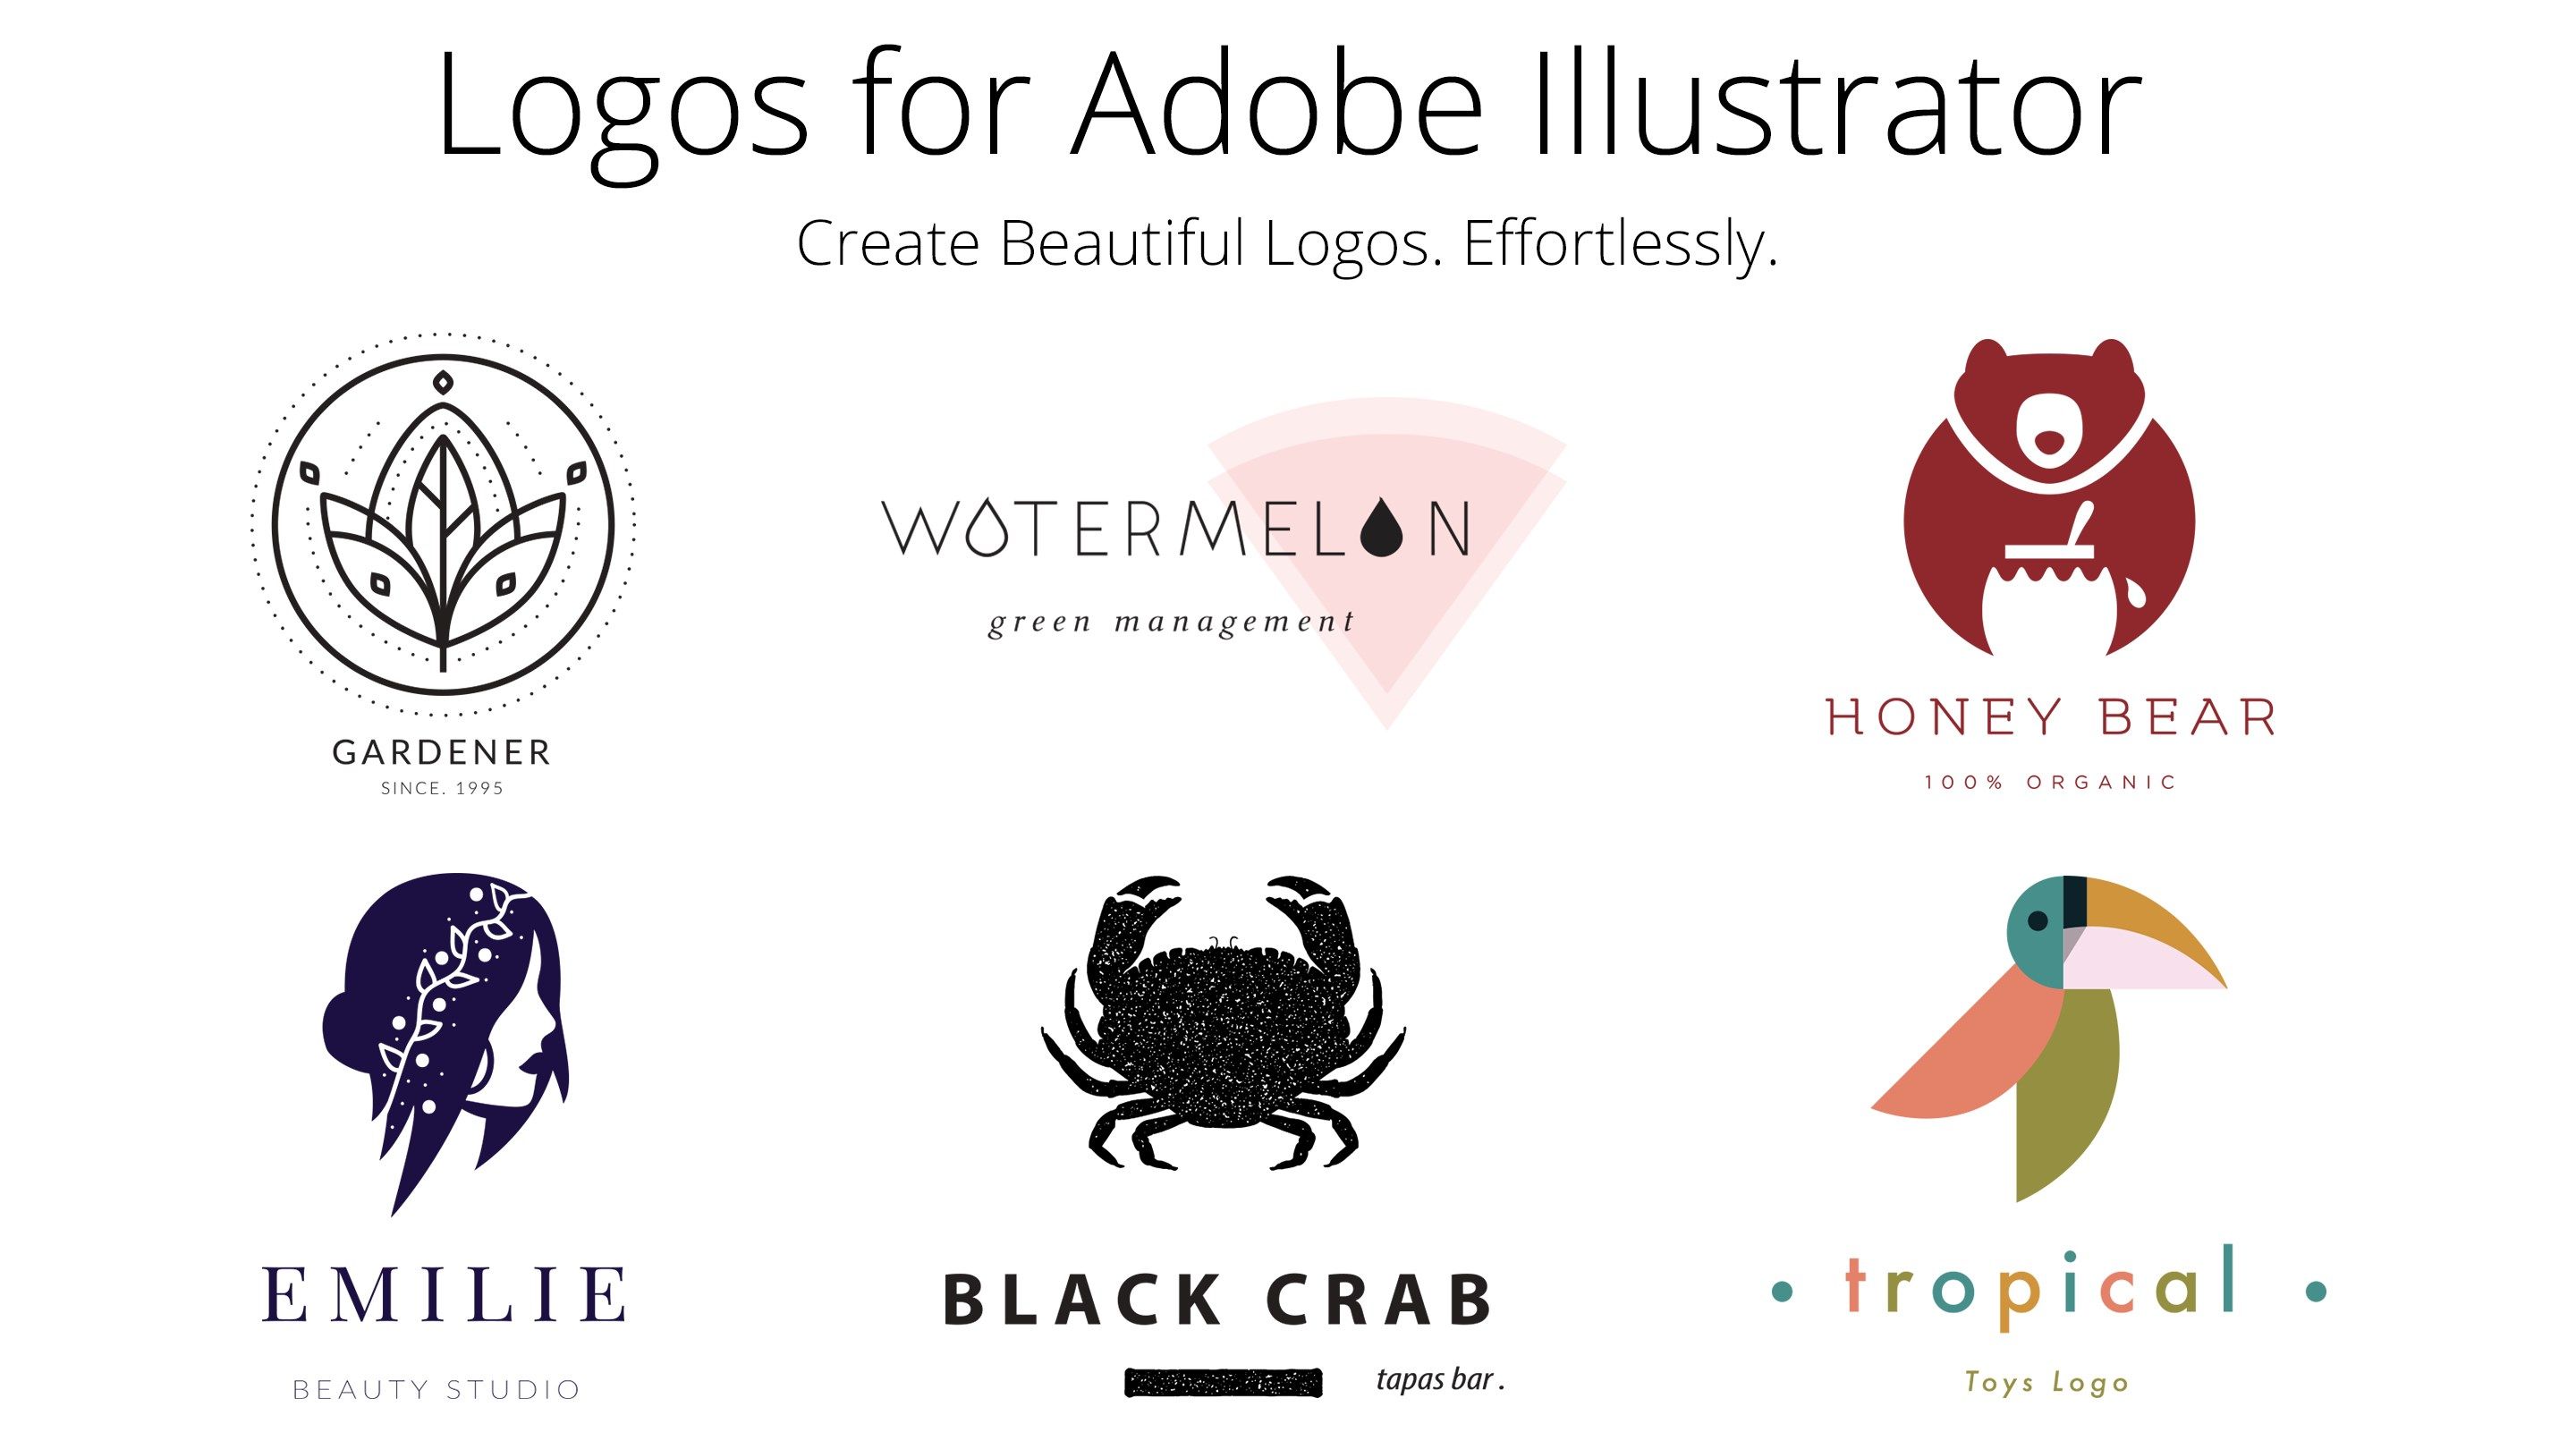 Preview of some Adobe Illustrator Logos.